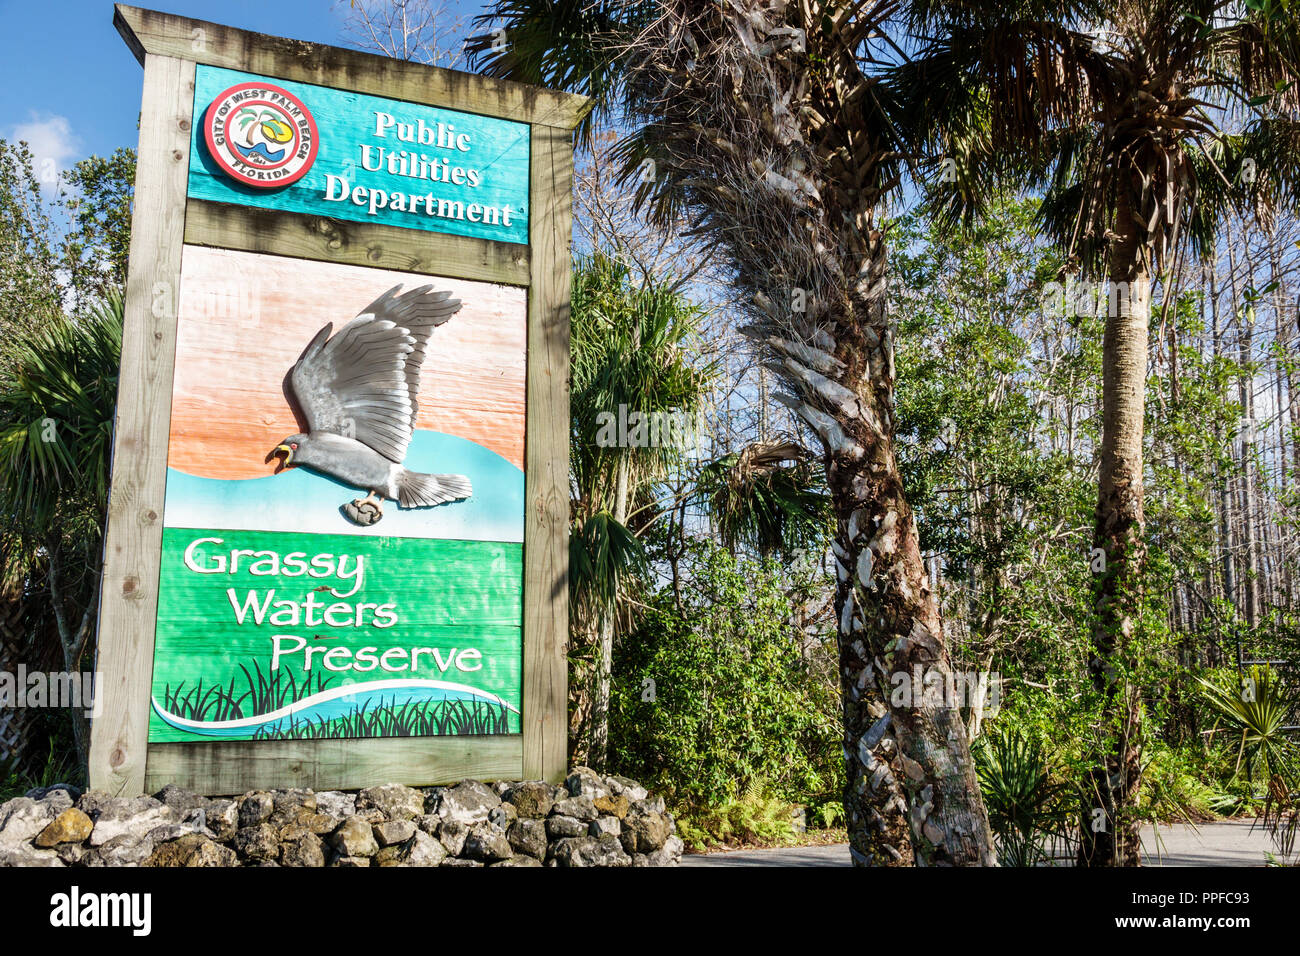 West Palm Beach Florida,Grassy Waters Nature Preserve wetlands ecosystem,public utilities department land,FL180212139 Stock Photo